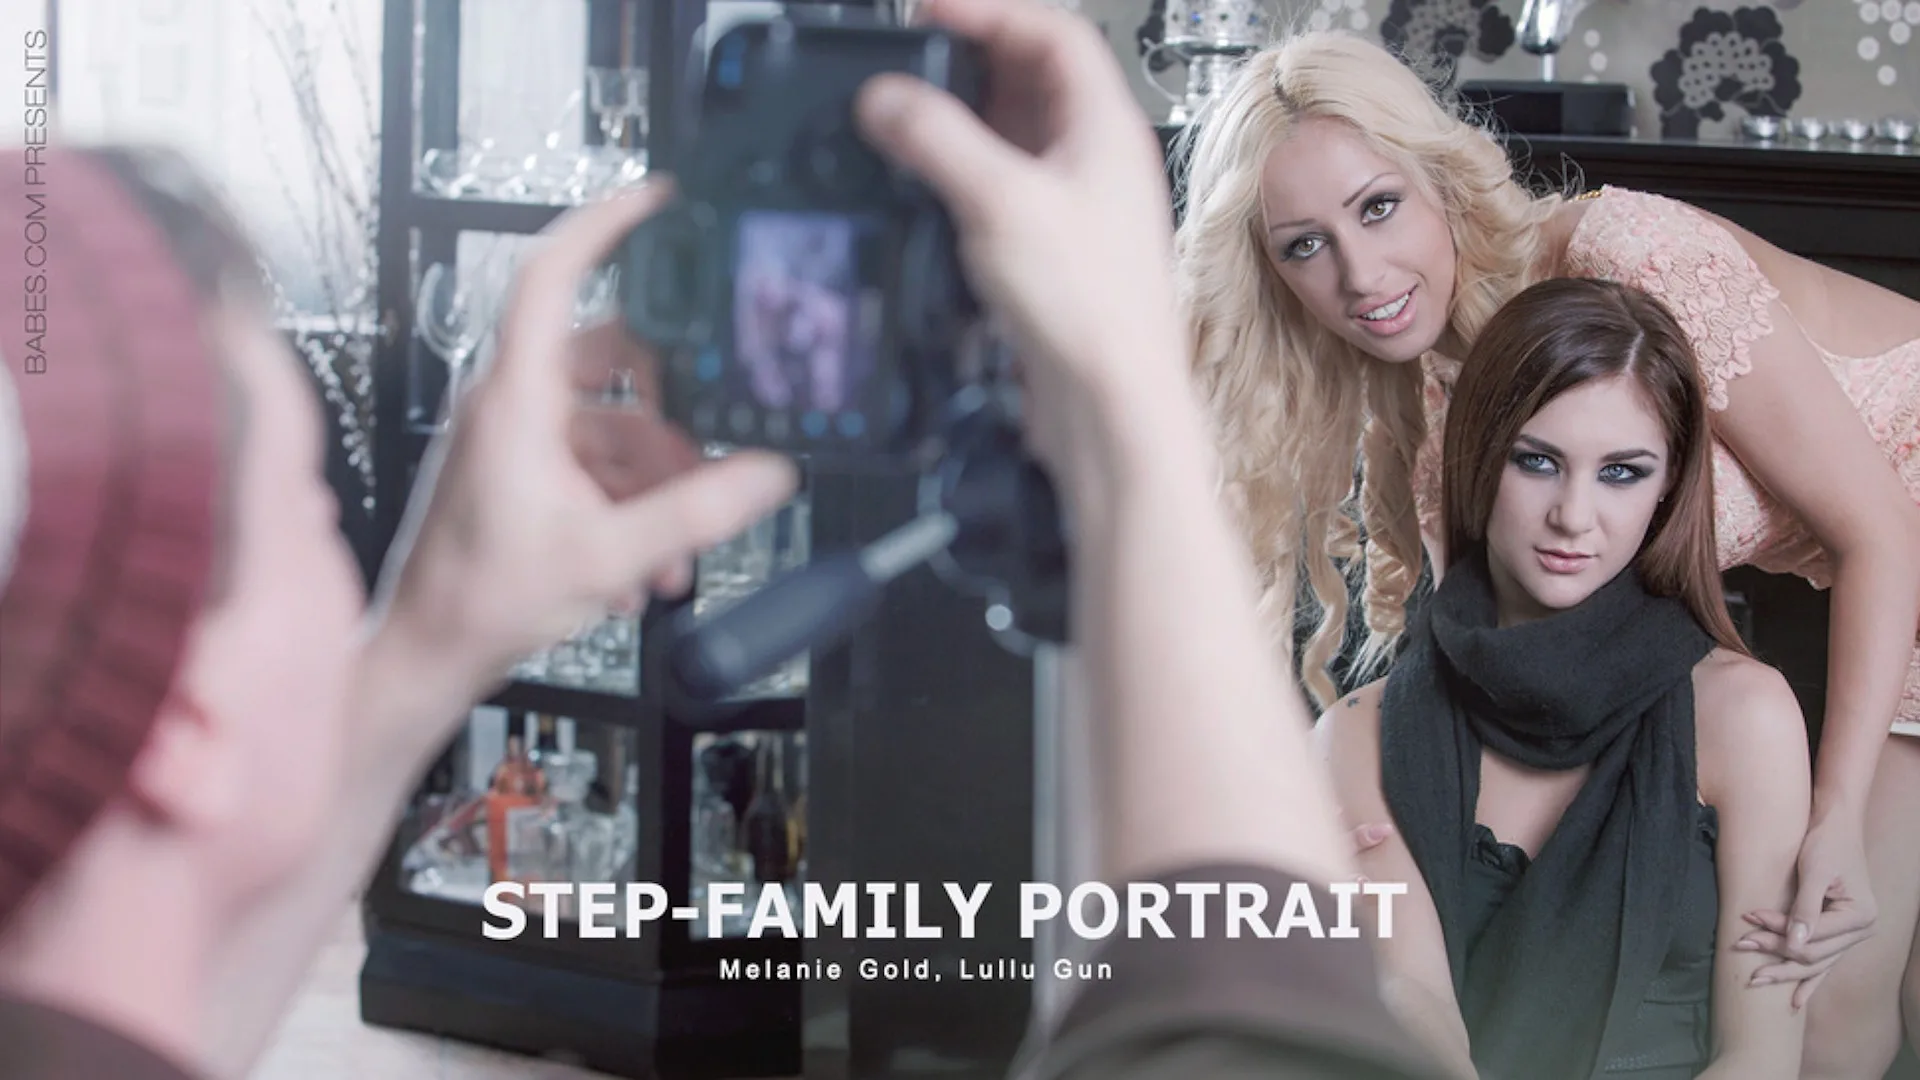 Step-Family Portrait - Step Mom Lessons